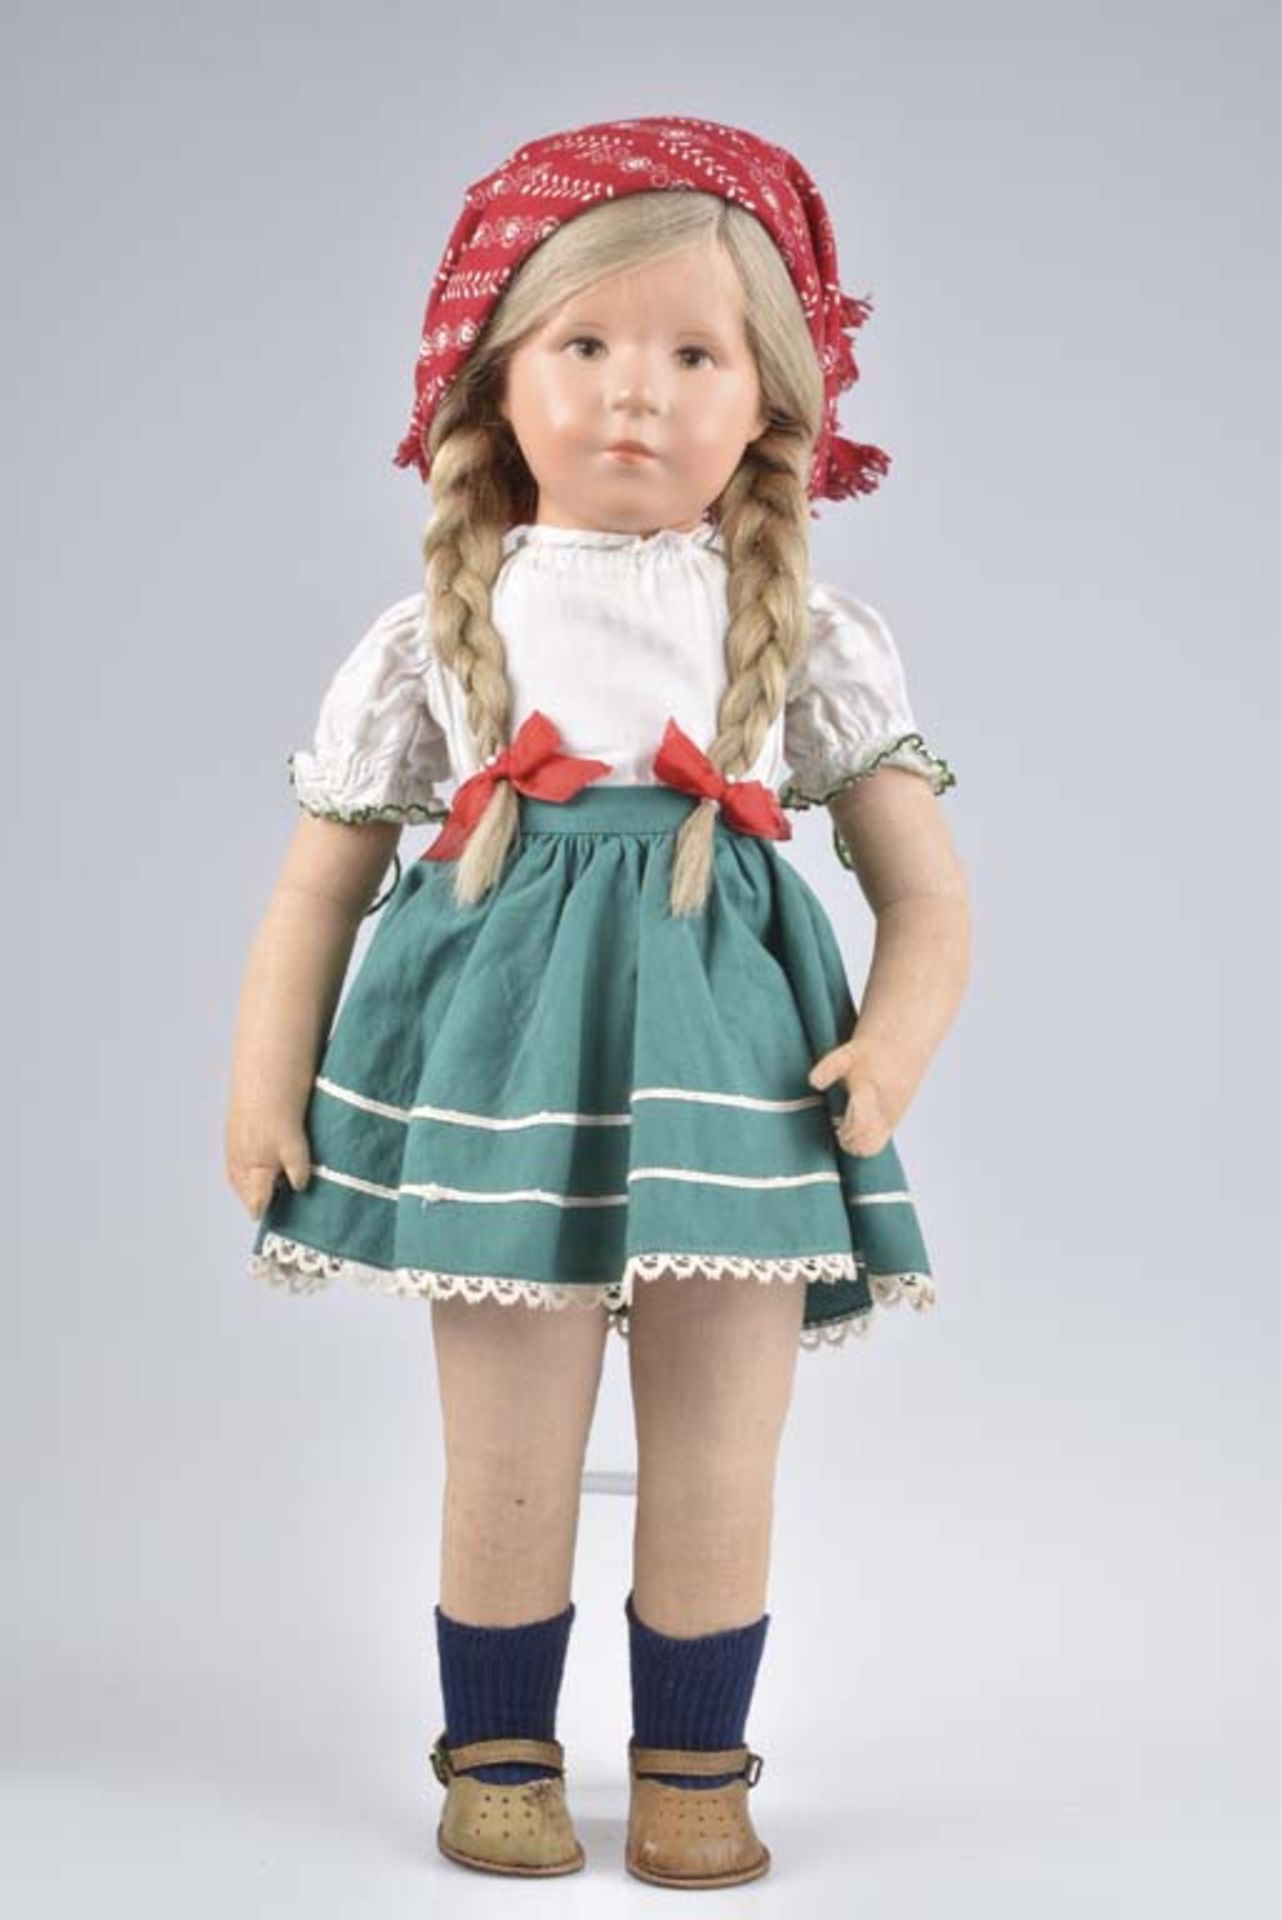 KÄTHE KRUSE Puppe Deutsches Kind 50er Jahre, li Fuß Käthe Kruse, re 340167 Made in